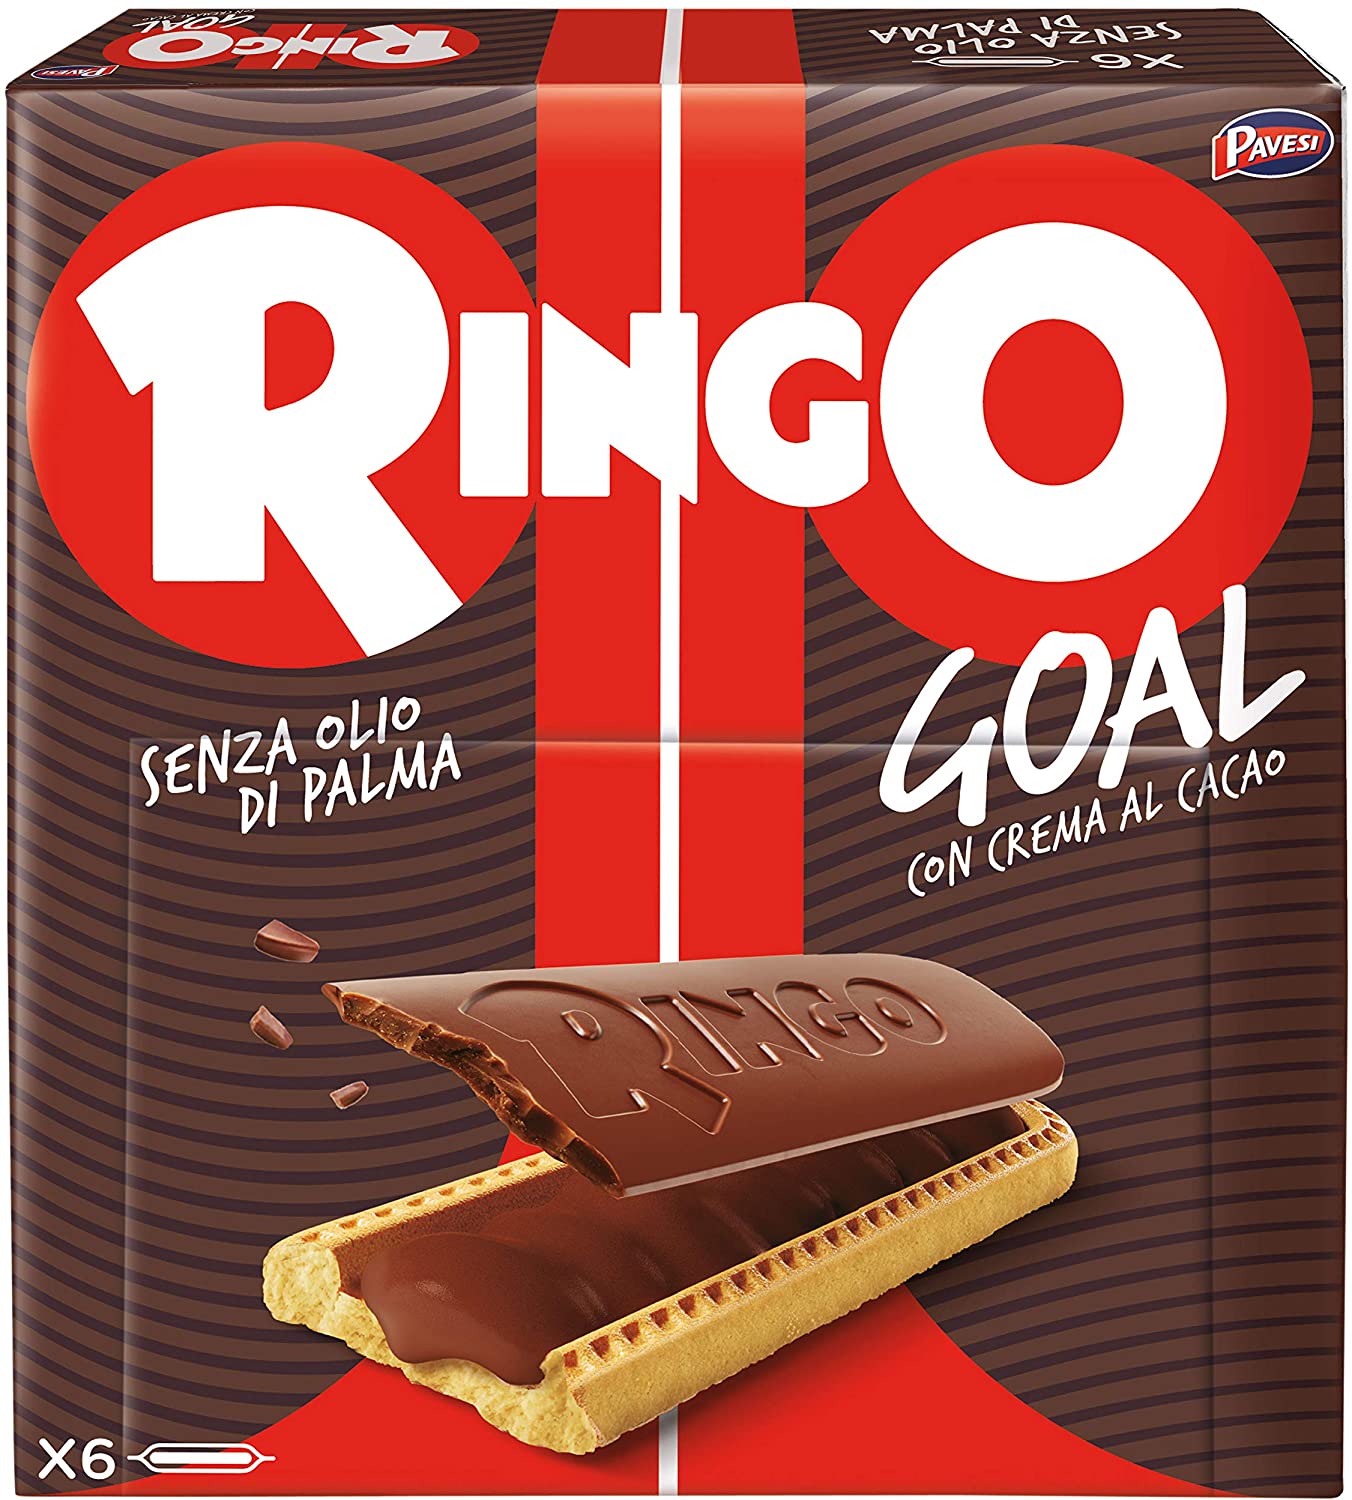 Pavesi Ringo Goal Cacao 168g